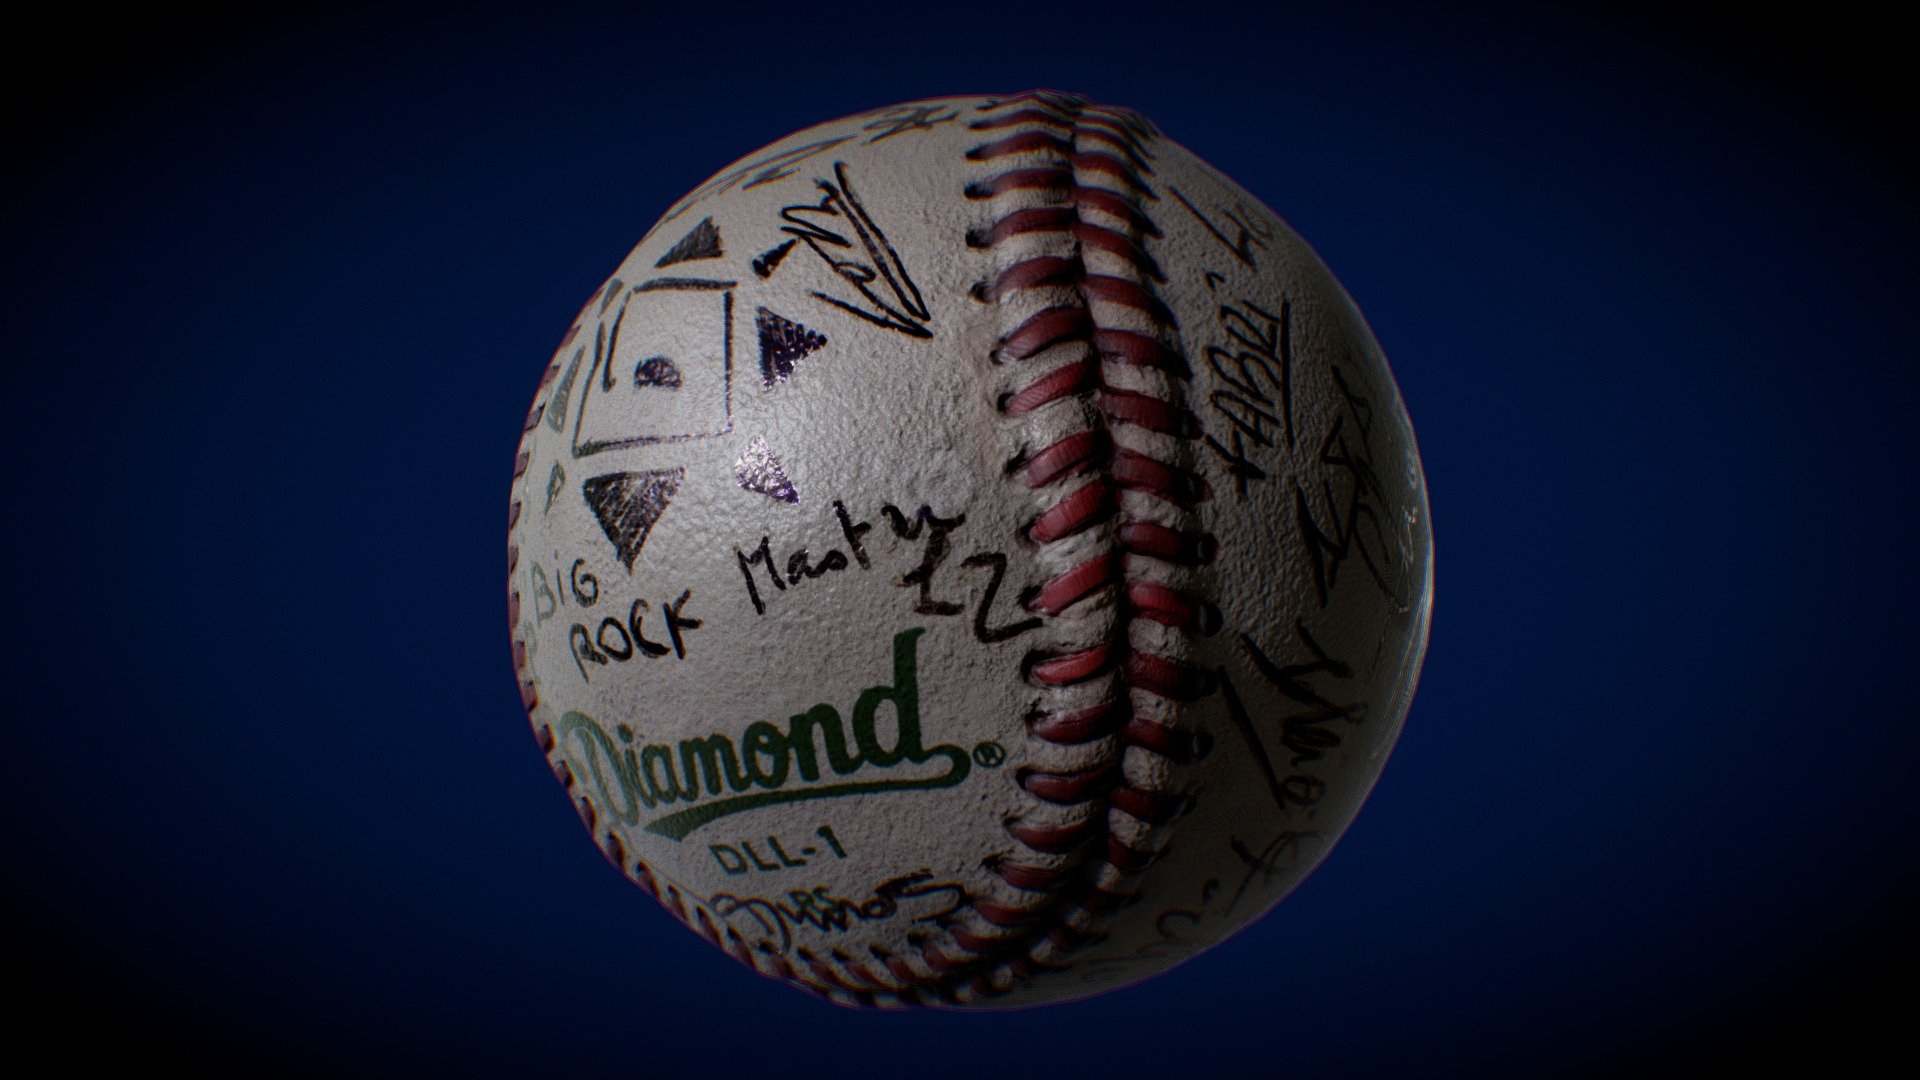 Baseball ball. Бейсбольный мяч. Мяч для бейсбола кожаный. Бейсбольный мяч 3д модель. Бейсбольный мяч с экраном.